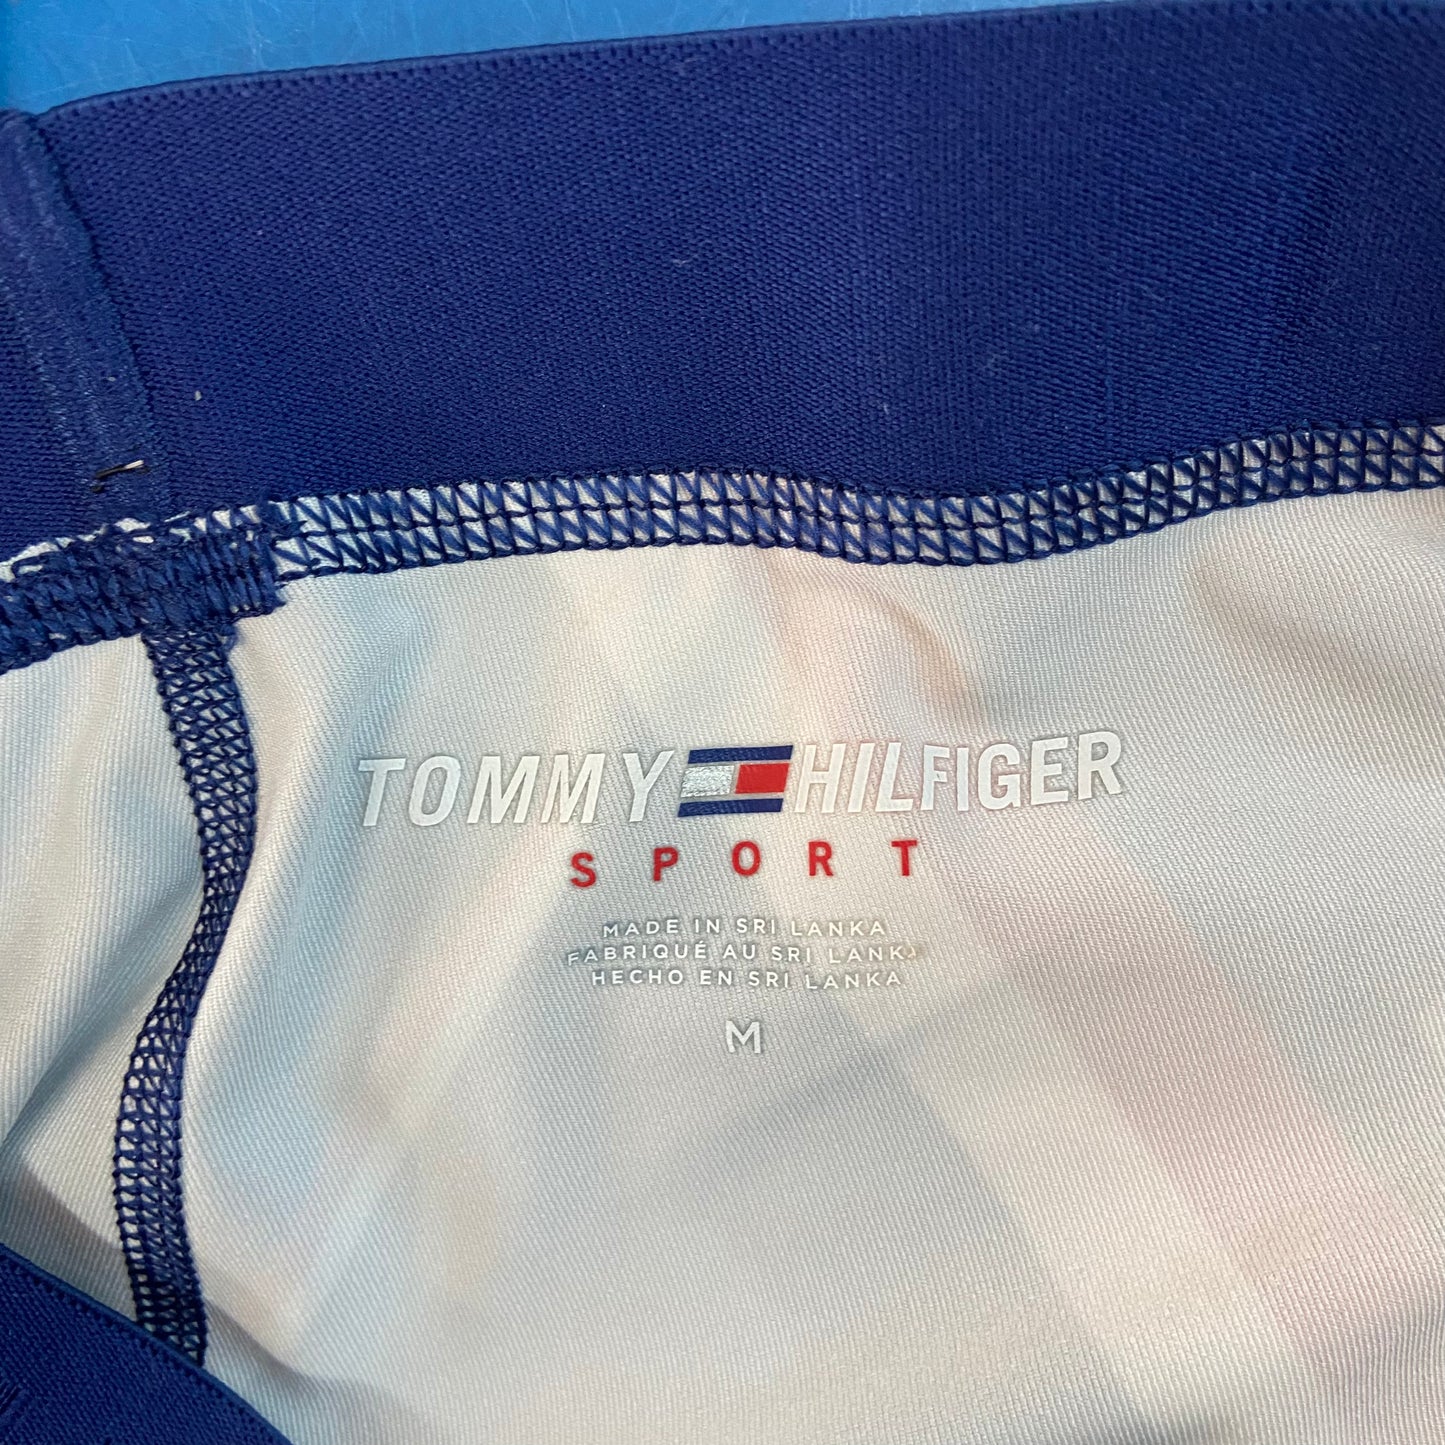 Tommy Hilfiger Sport Women's Leggings Blue/Red- Size Medium